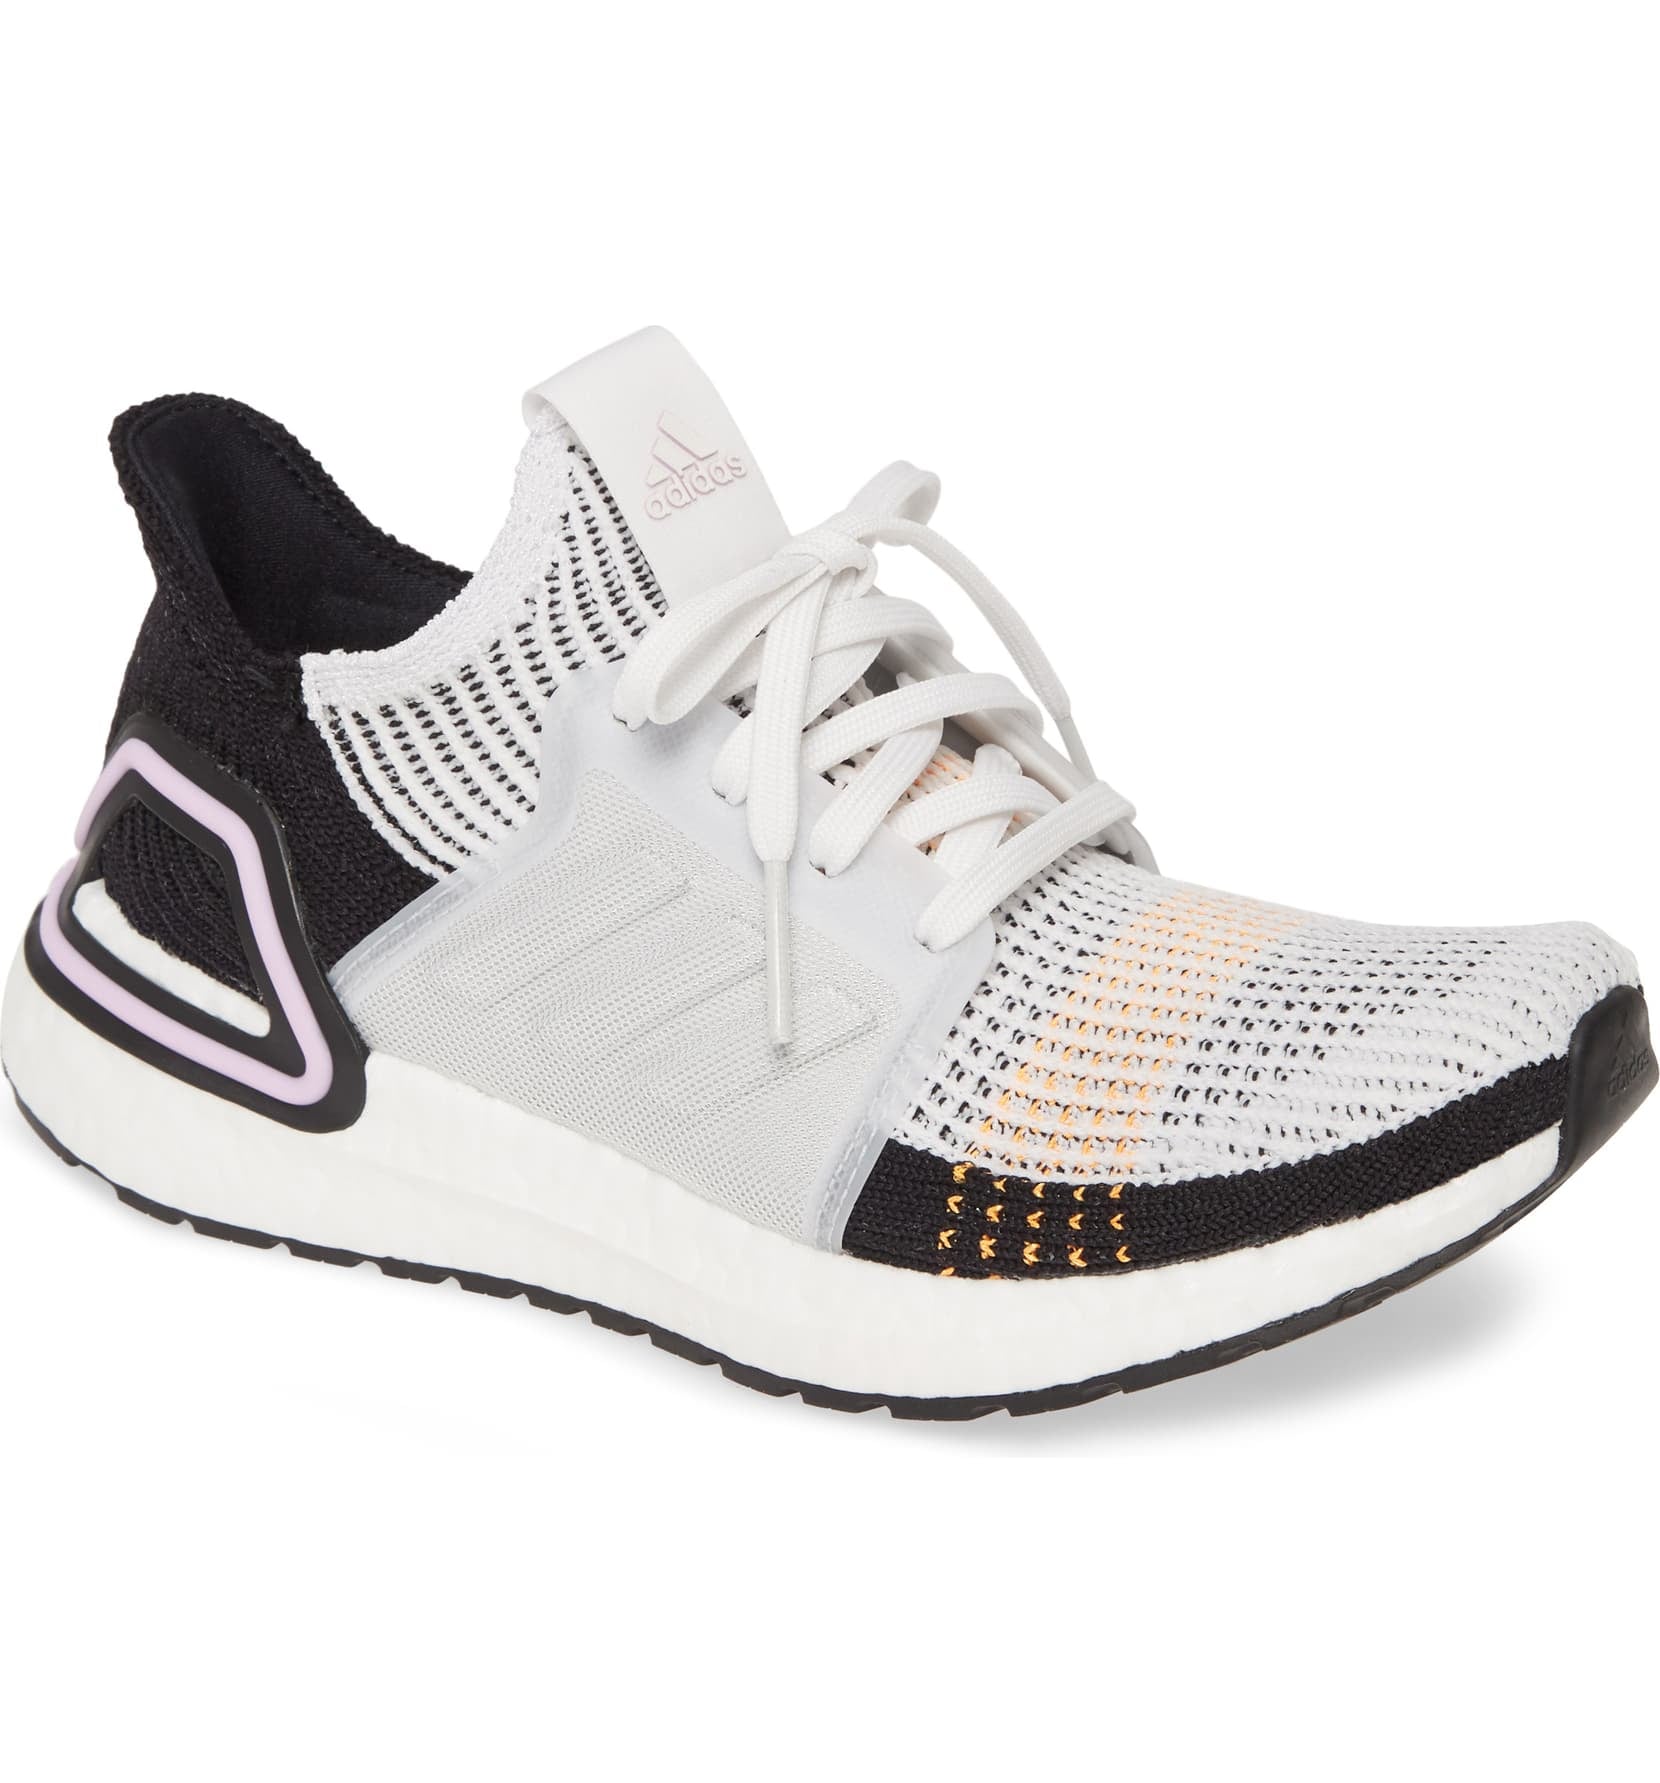 Adidas UltraBoost 19 Running Shoe 